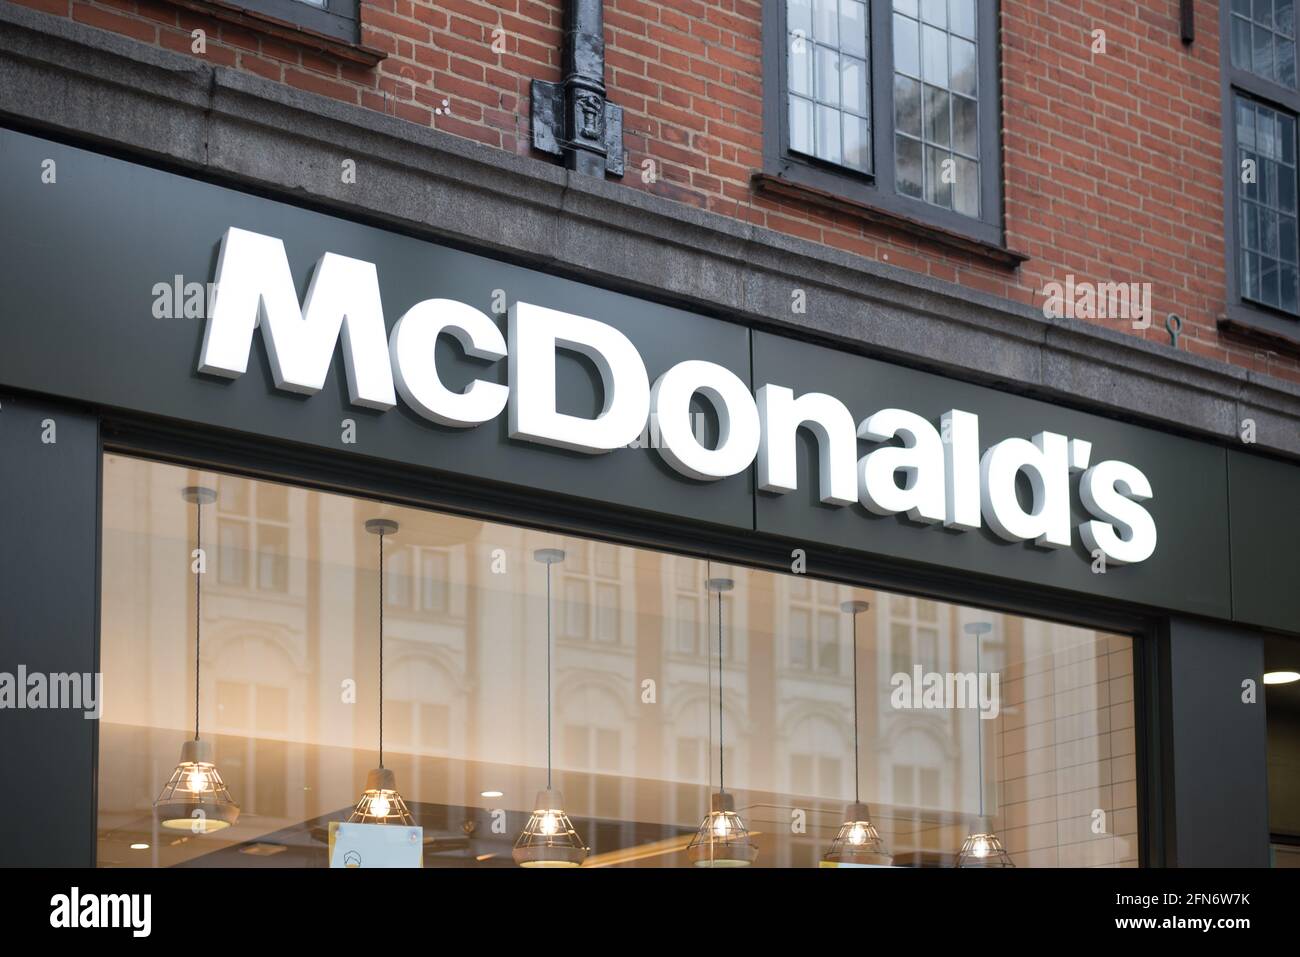 Macdonalds Fast Food Restaurant Logo Shop Sign Stock Photo